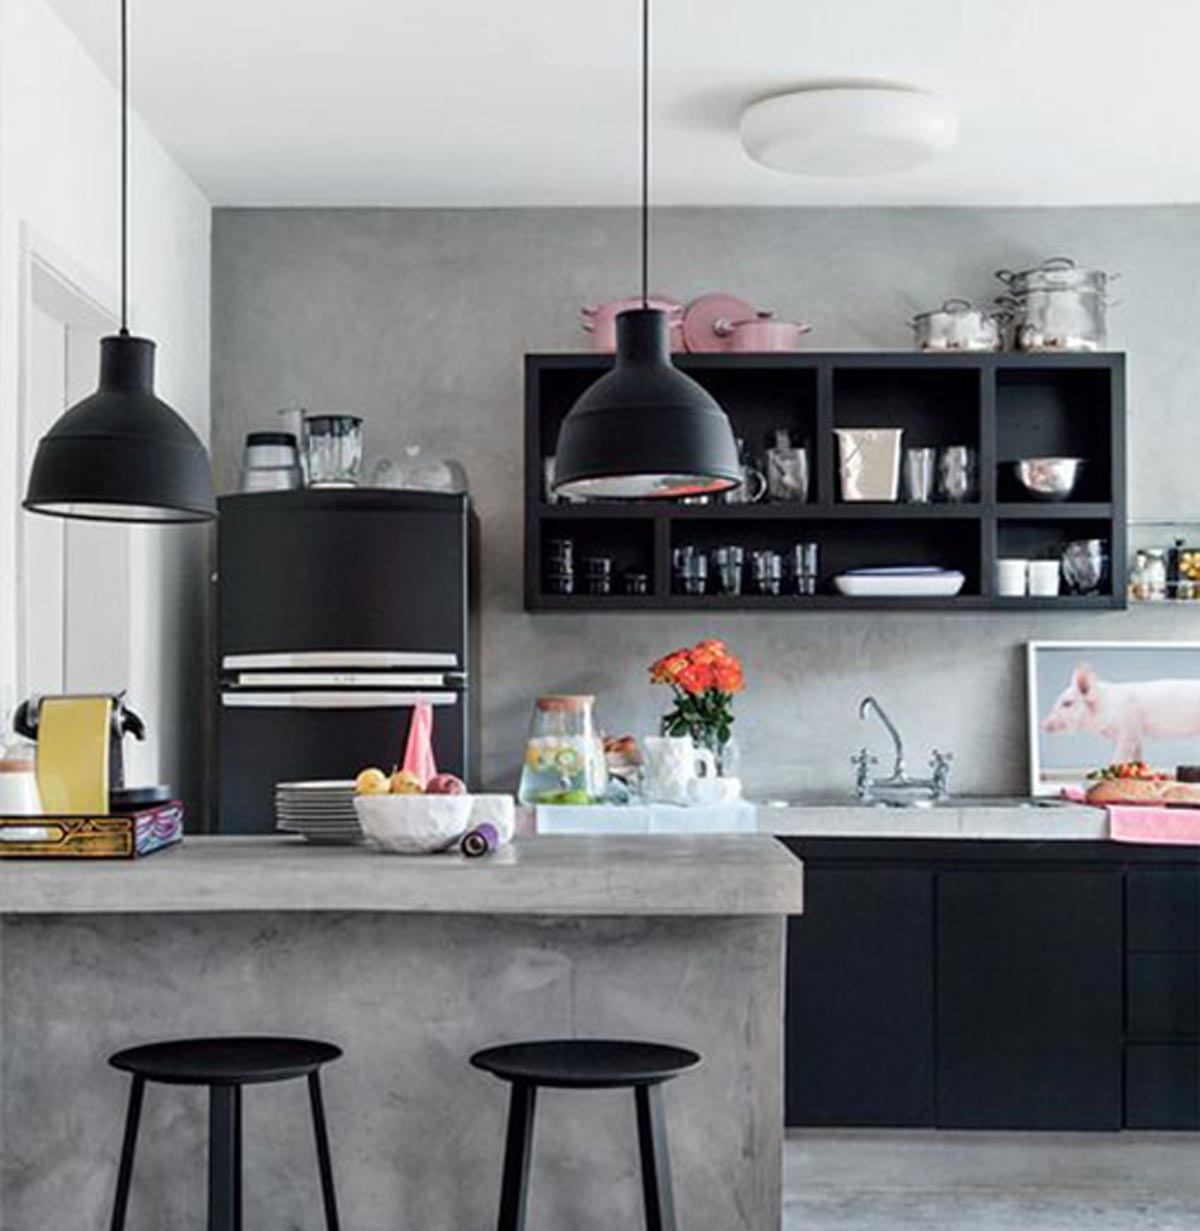 Desain Dapur Minimalis Inspiratif Ala Cafe - Gambar Rumah